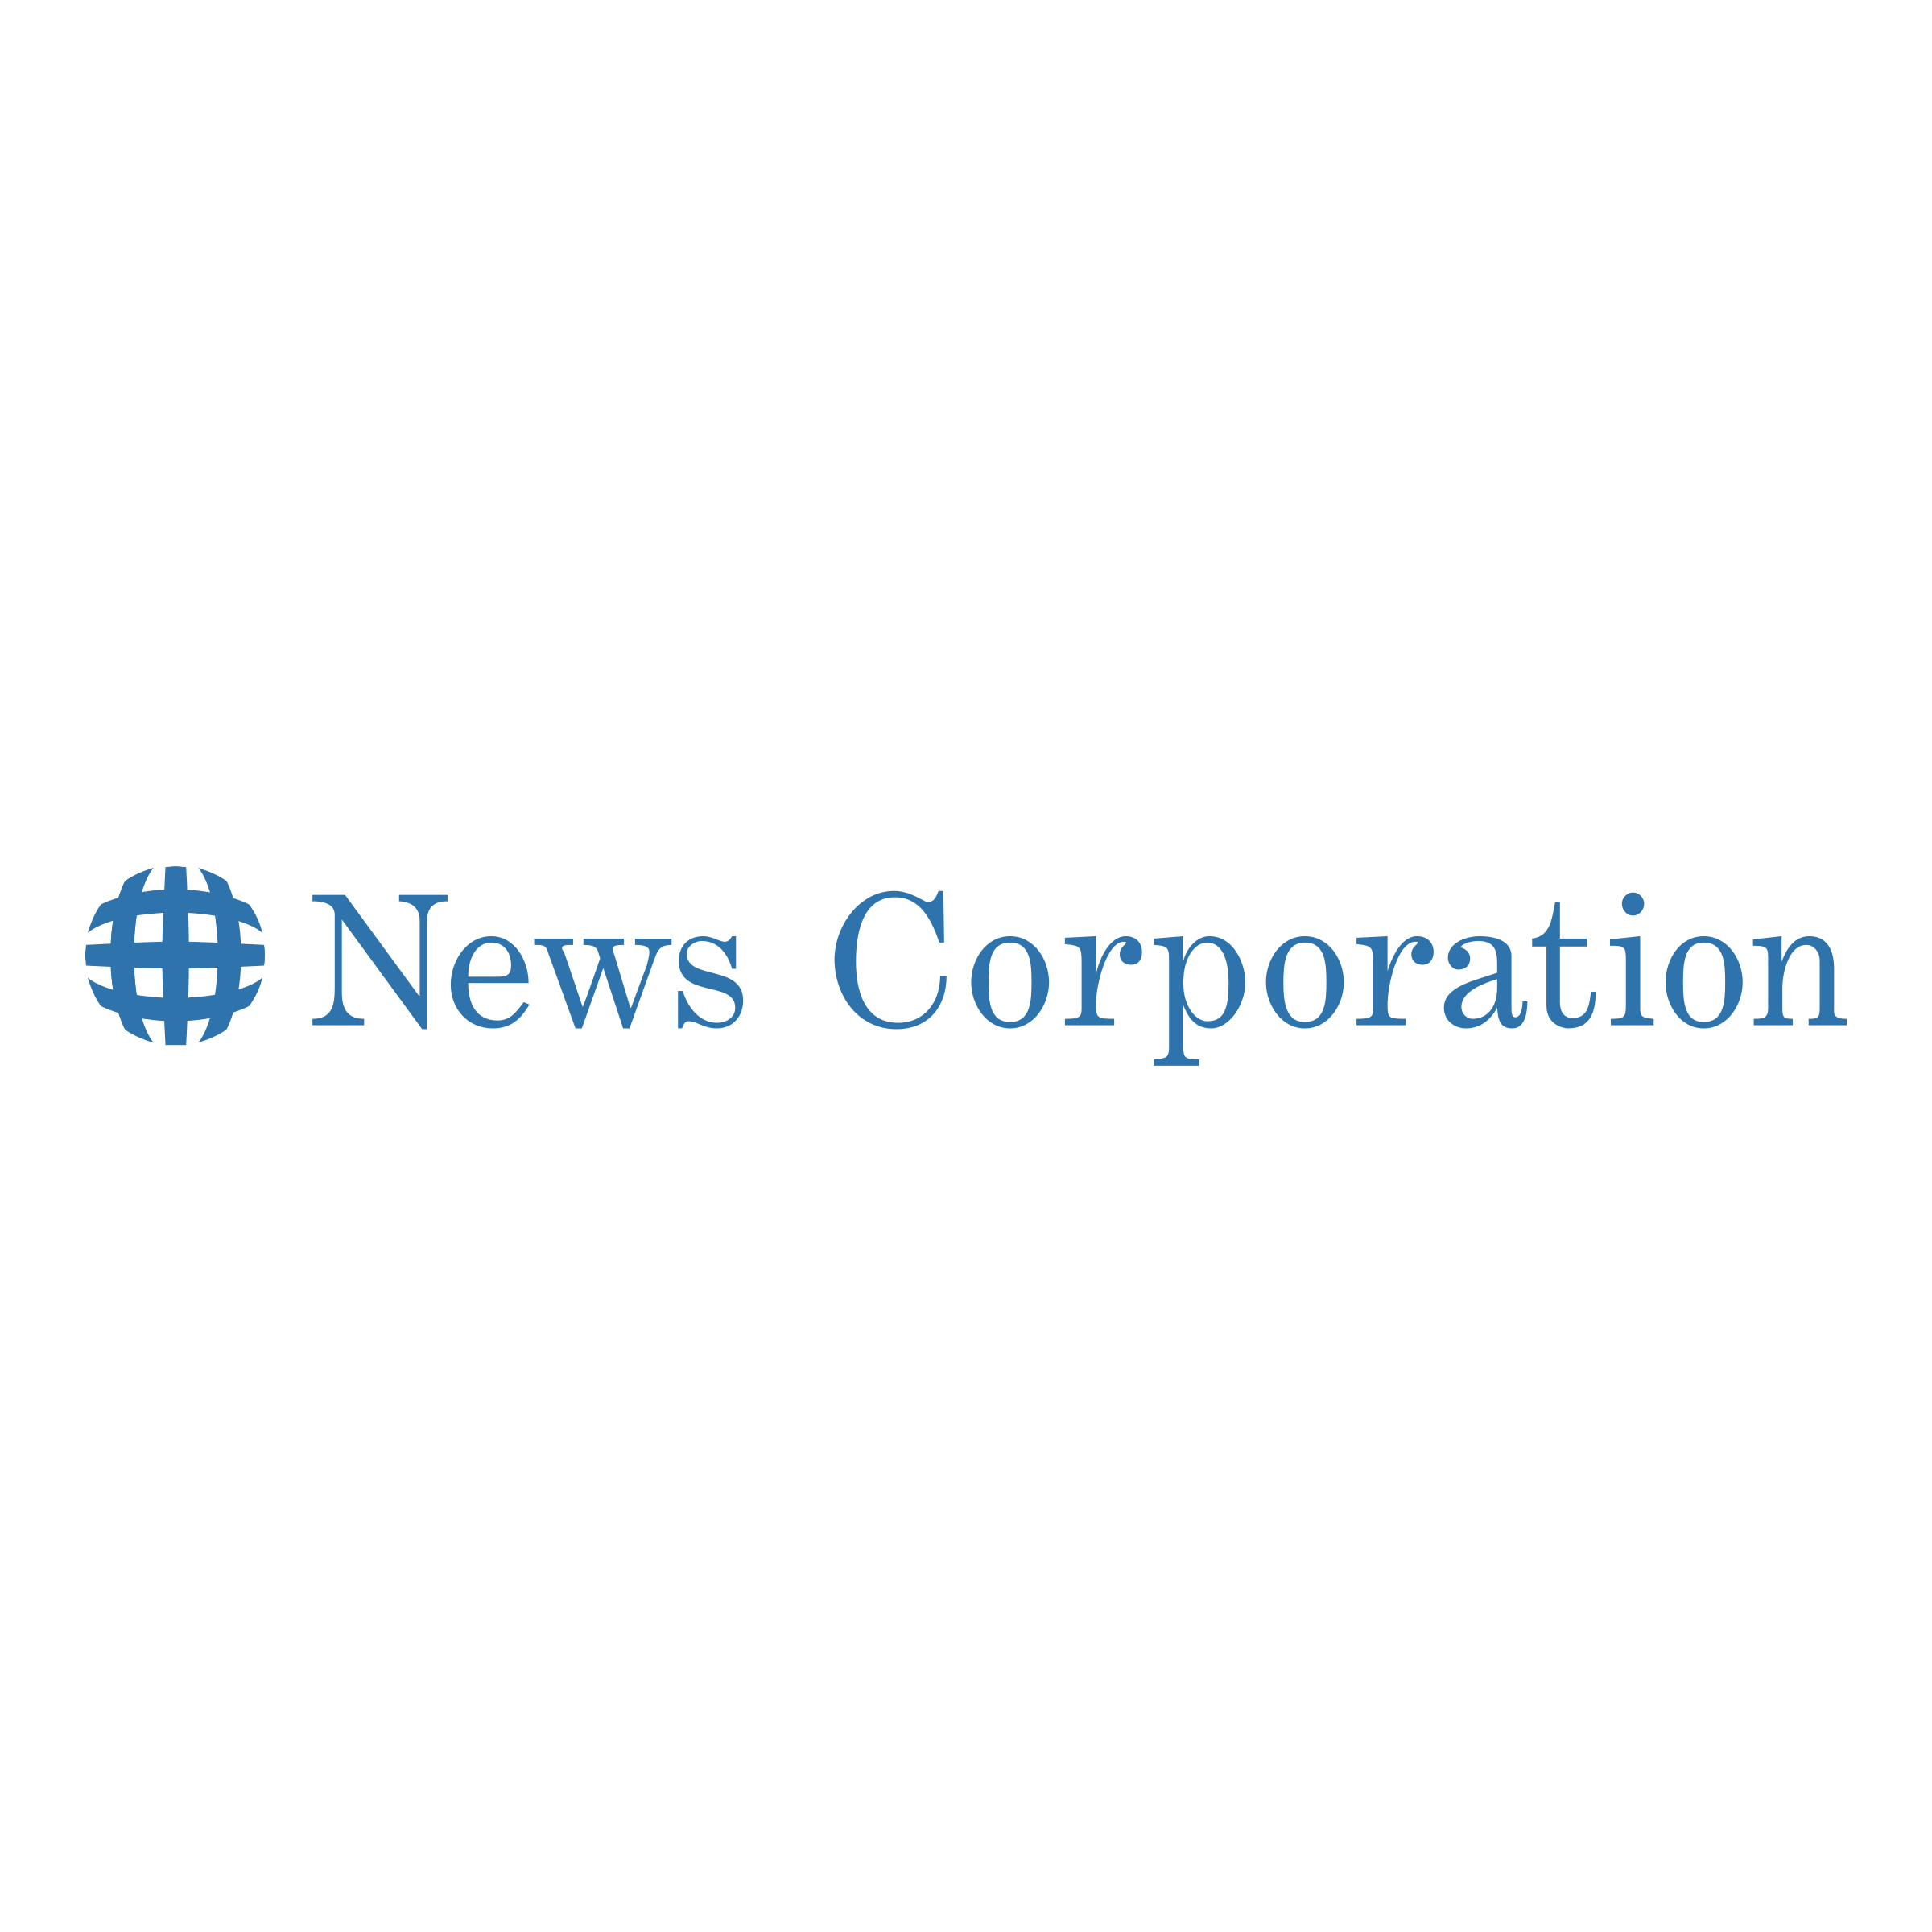 News Corporation Logo - News Corporation Logo PNG Transparent & SVG Vector - Freebie Supply